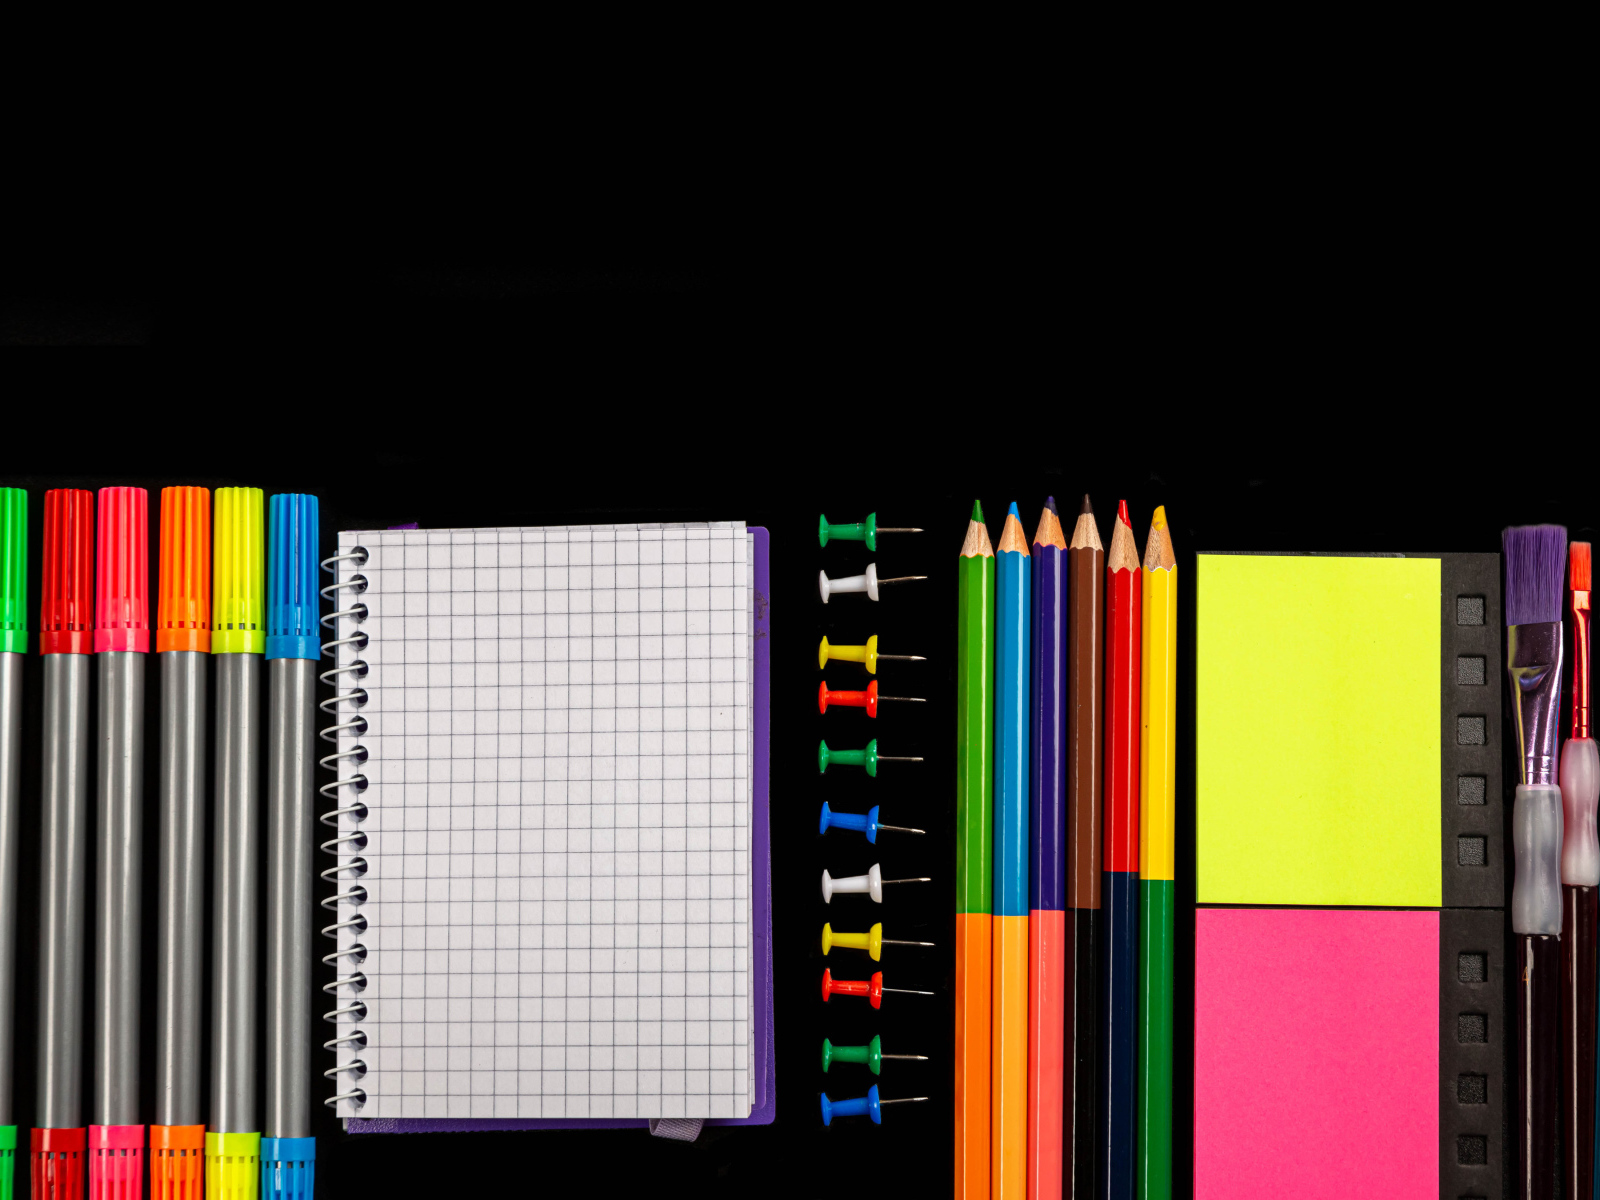 Felt pens, pencils, notebook and brushes on black background